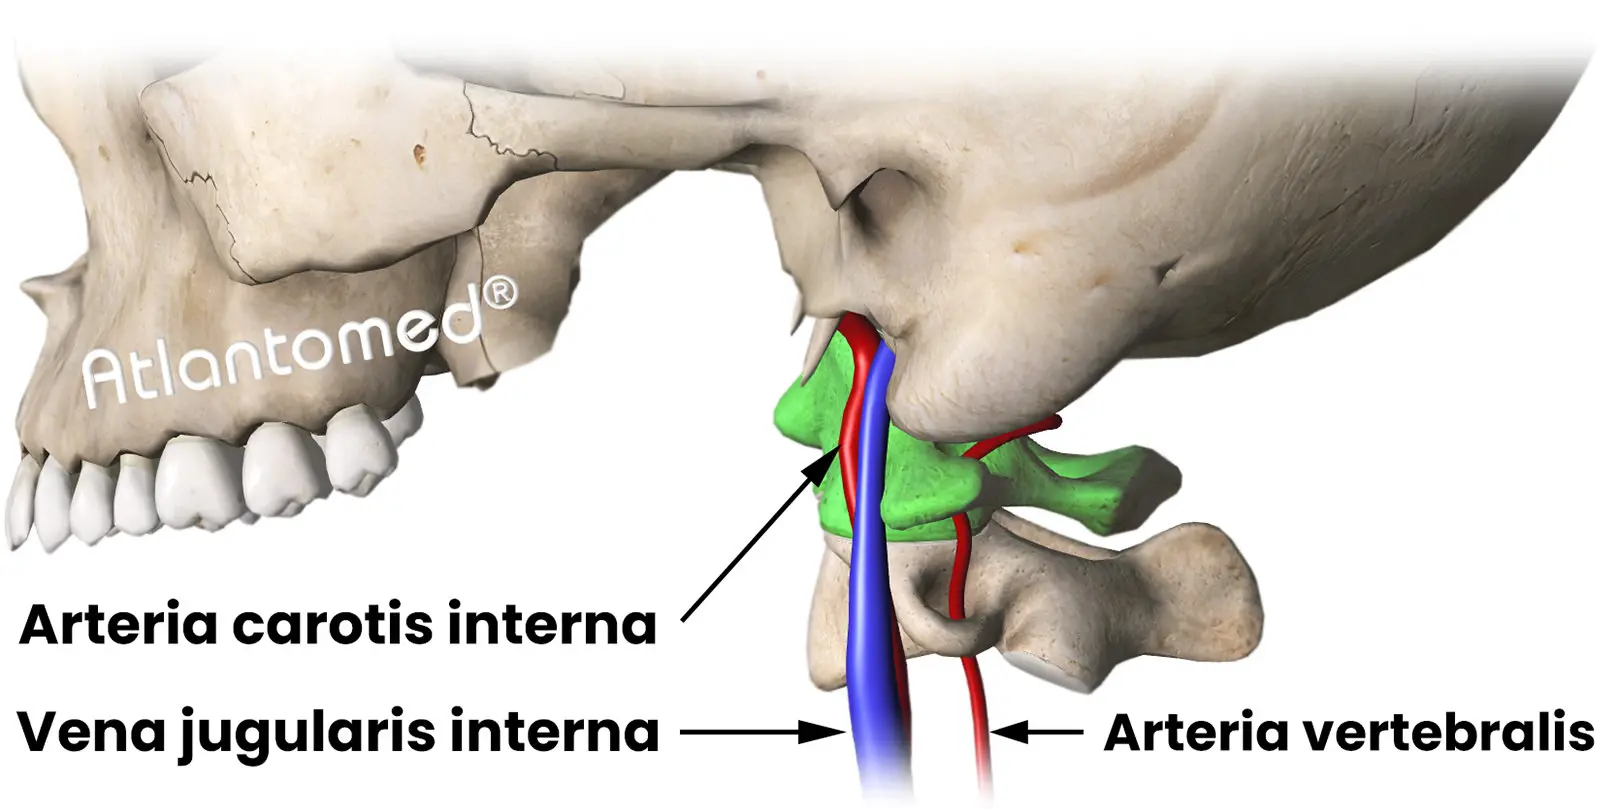 Arteria carotide interna, vena giugulare, arteria vertebrale in relazione alla vertebra Atlante